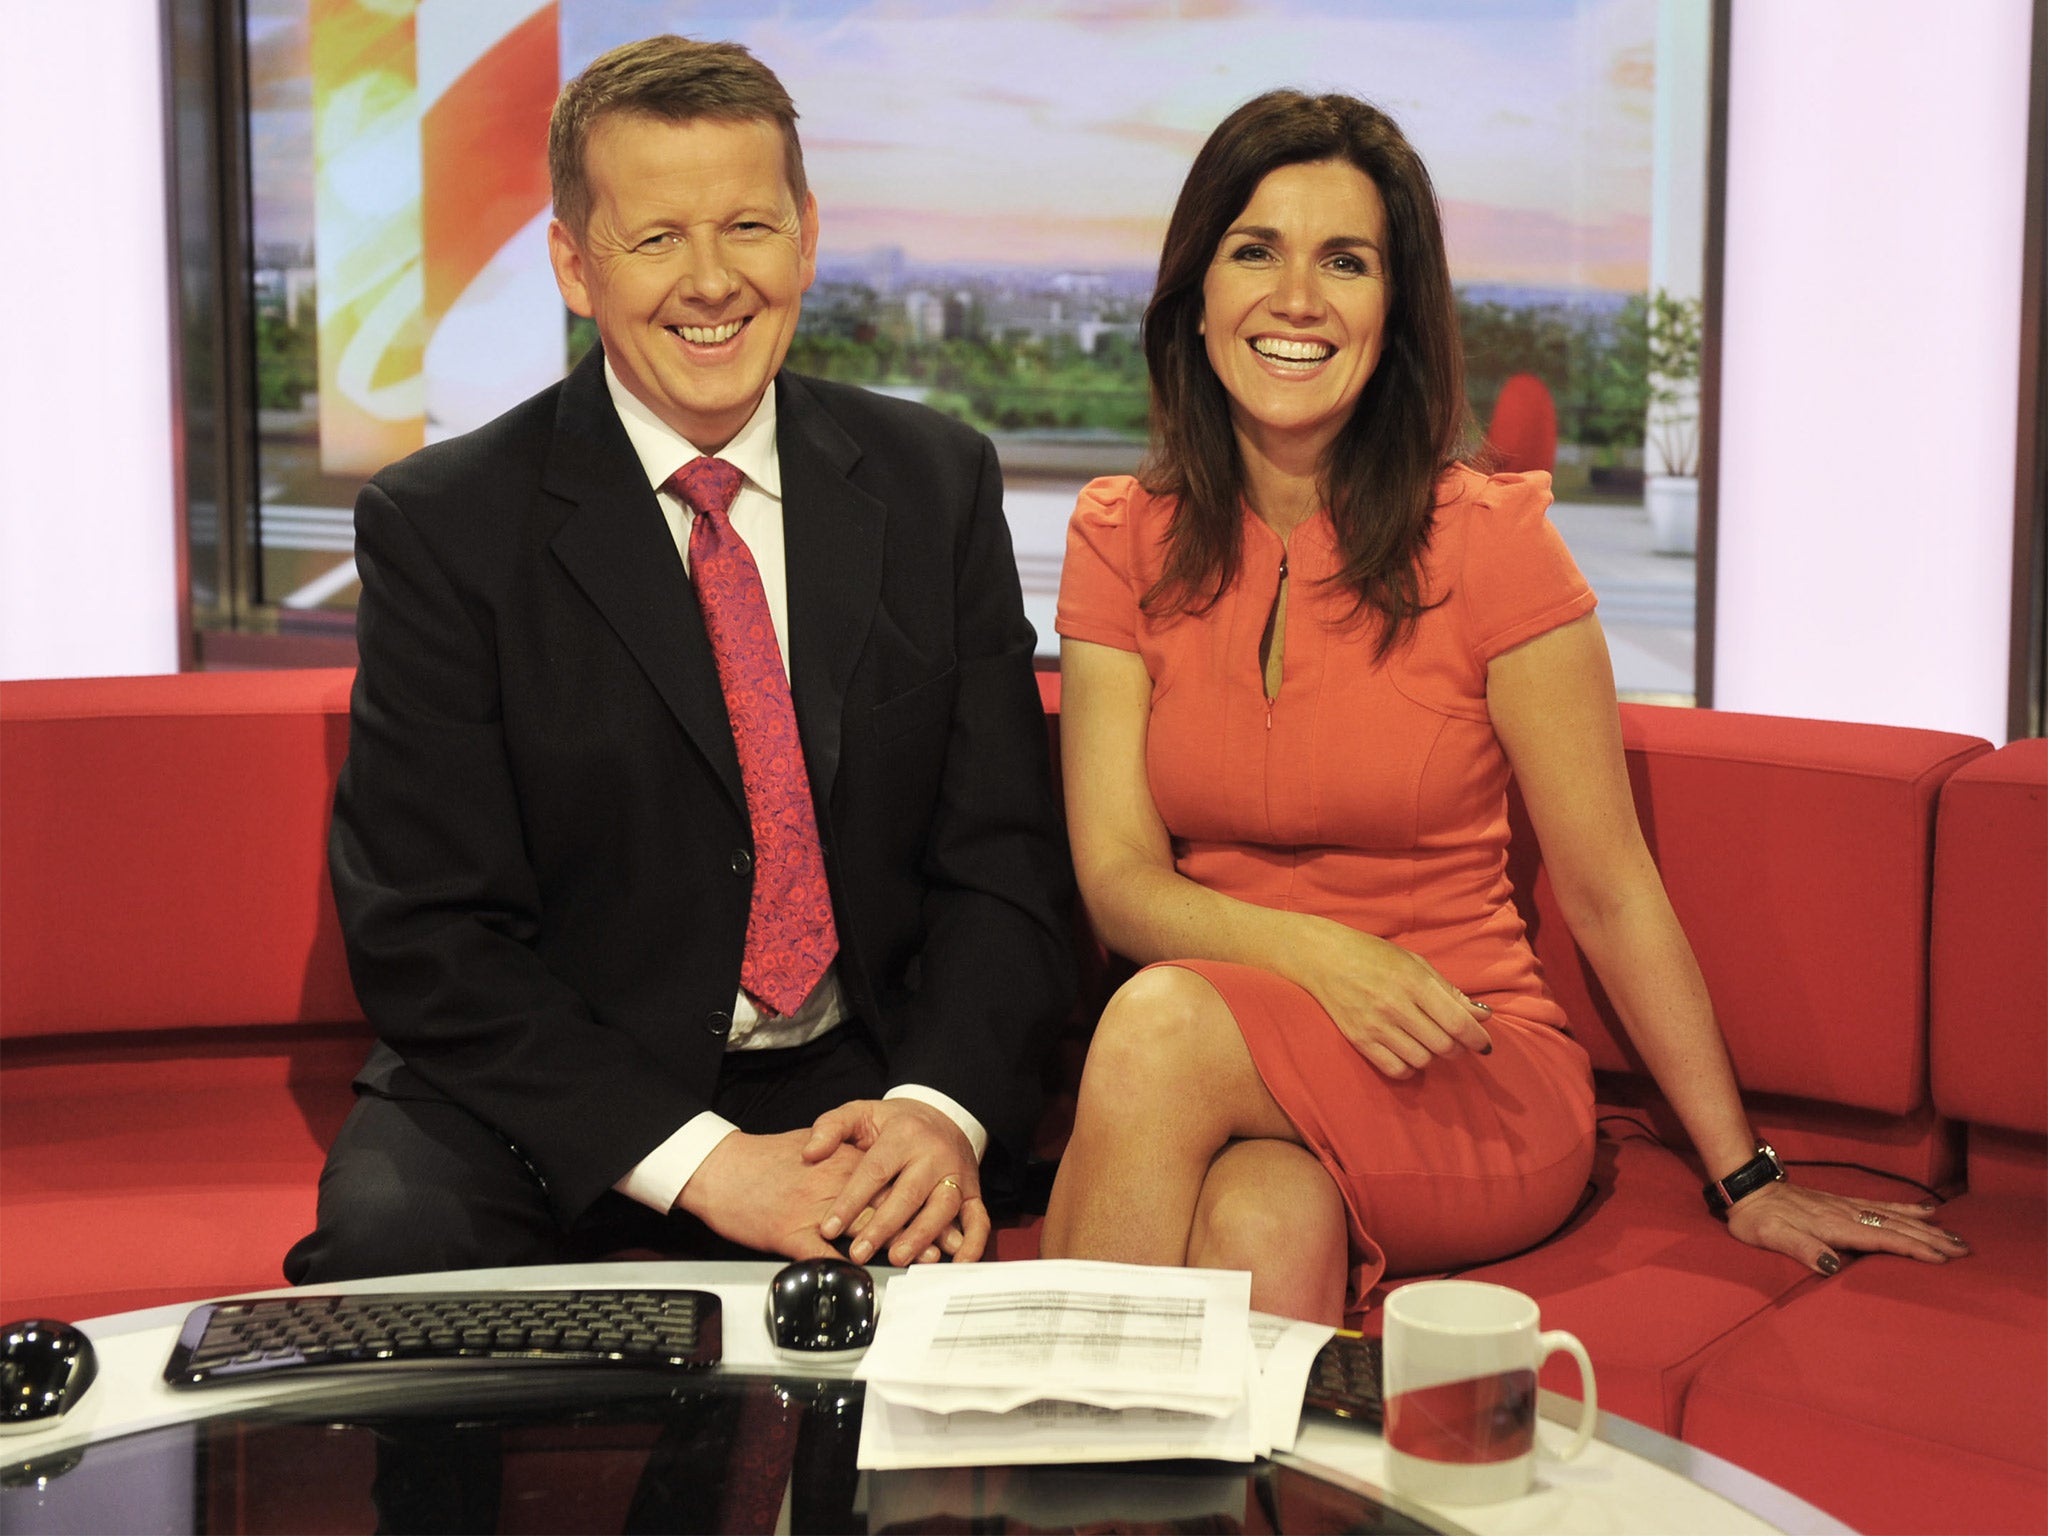 The ‘Breakfast’ TV presenter Susanna Reid left the BBC for an ITV job